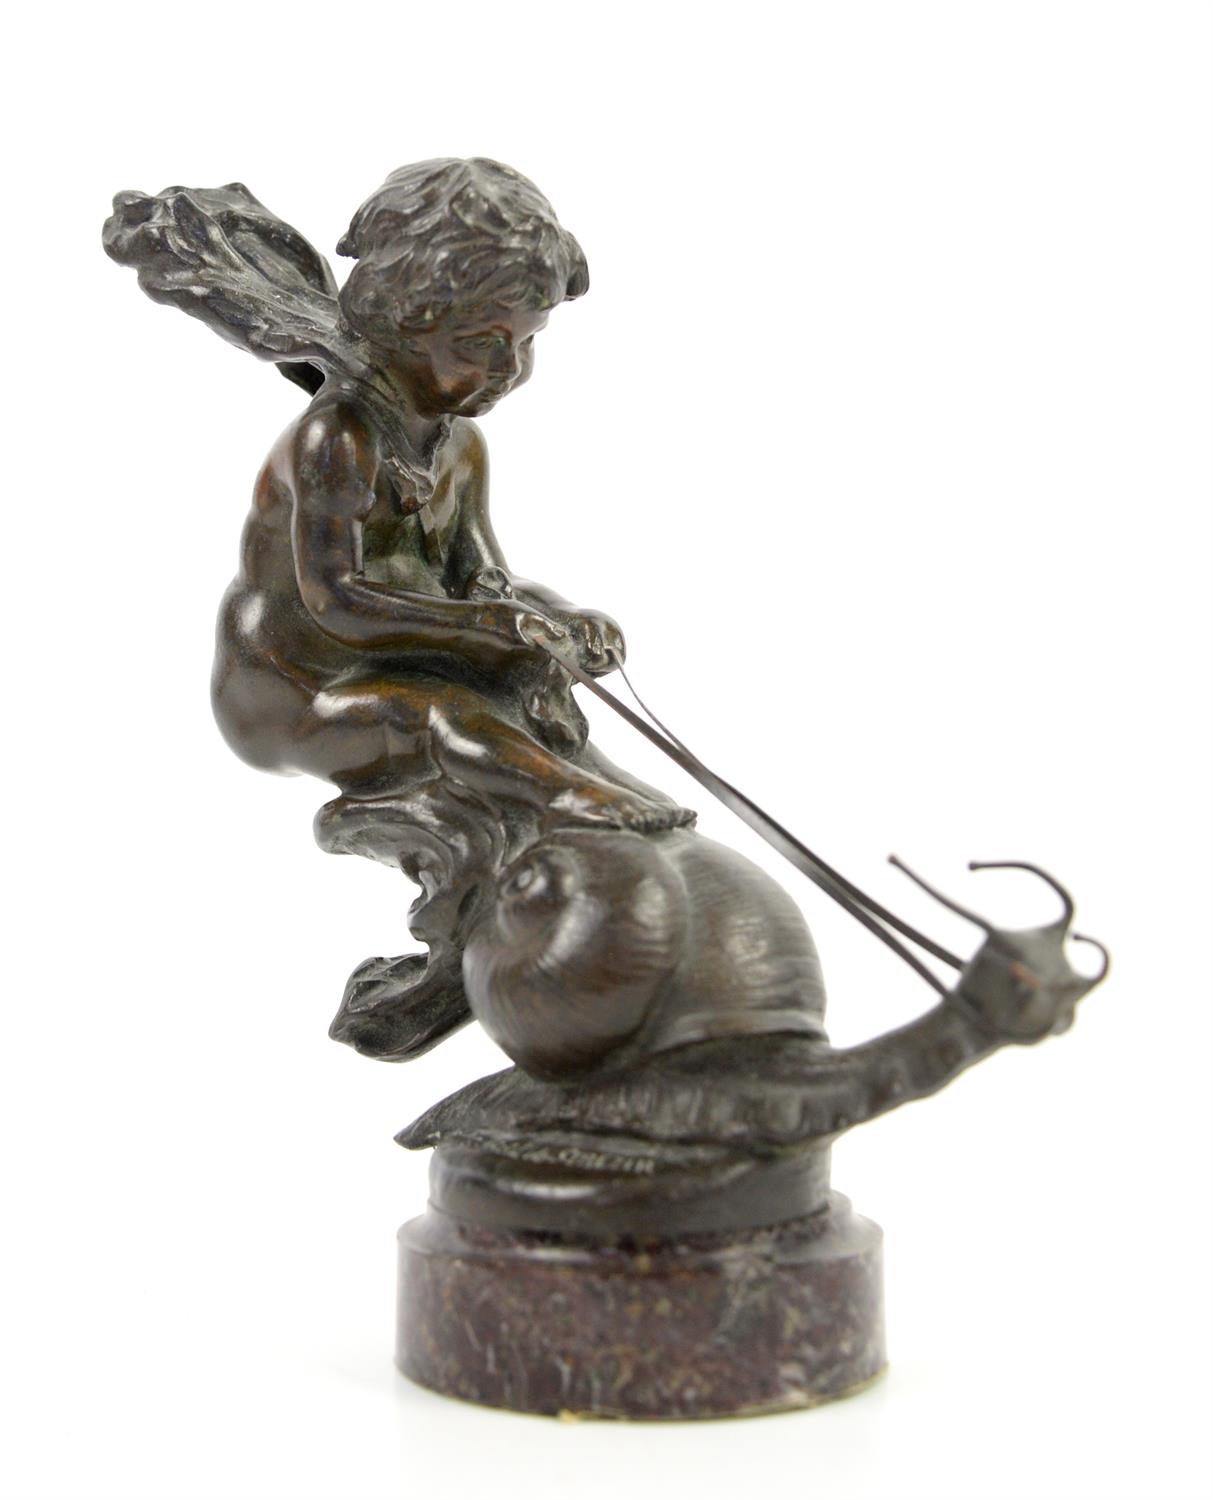 Art Nouveau bronze figure of a young boy or putto riding a snail, inscribed Galral de Serezin, h22.